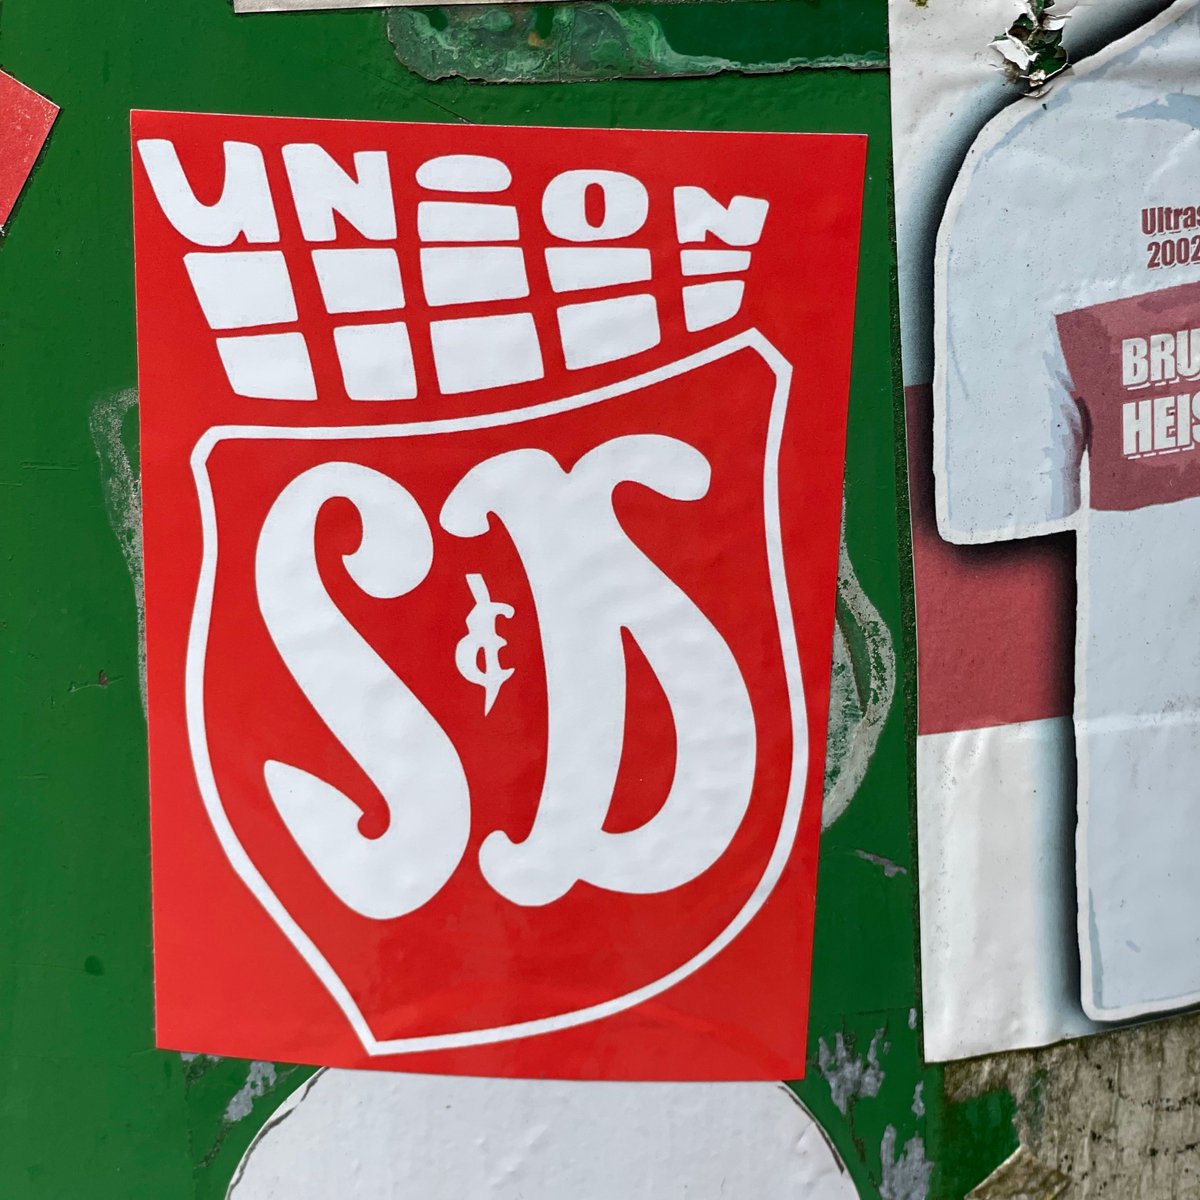 🇩🇪 Union Berlin
@fcunion @StadionAdAF @fcunion_es @fcunion_BRA @UnionBerlinMan @UnioninEnglisch
#fcunion
#ultrasstickers #footballstickers #footballculture #Ultras #StickerHunting